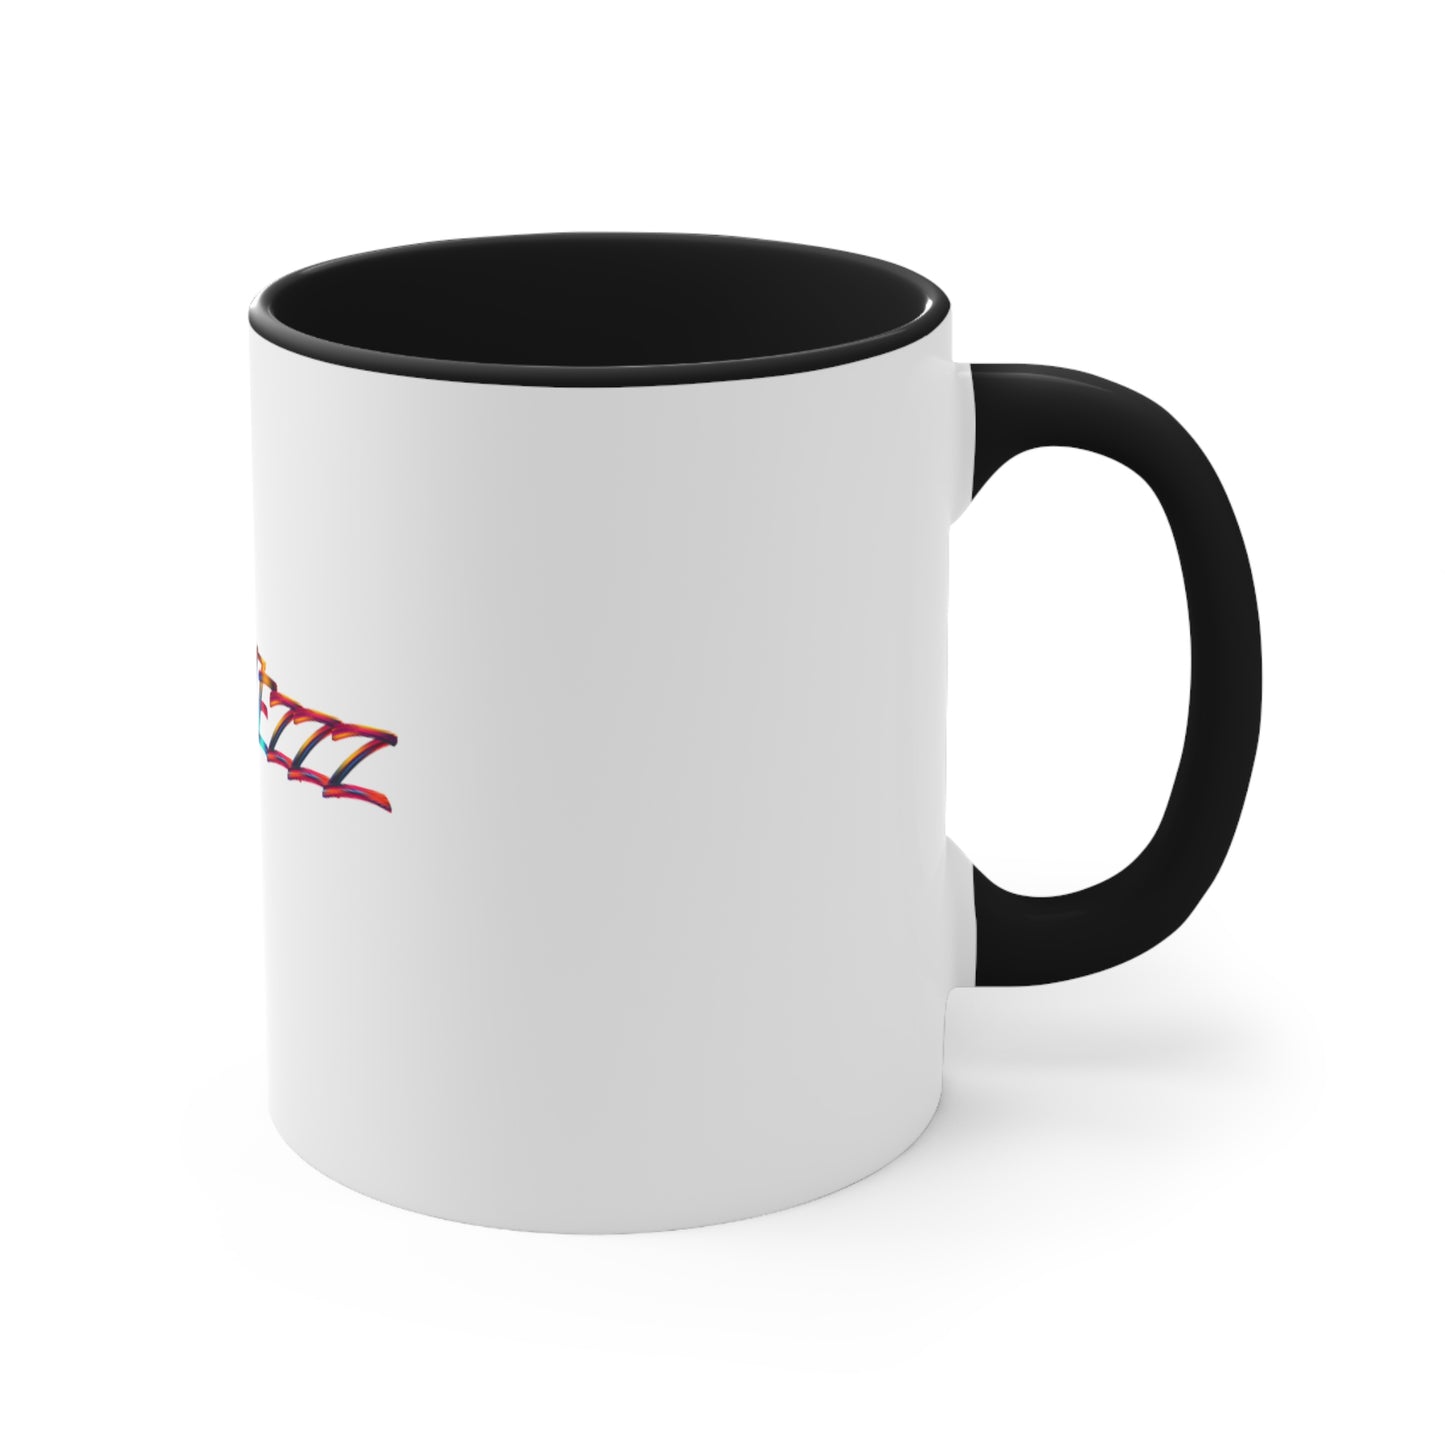 Socratezzz - Accent Coffee Mug, 11oz